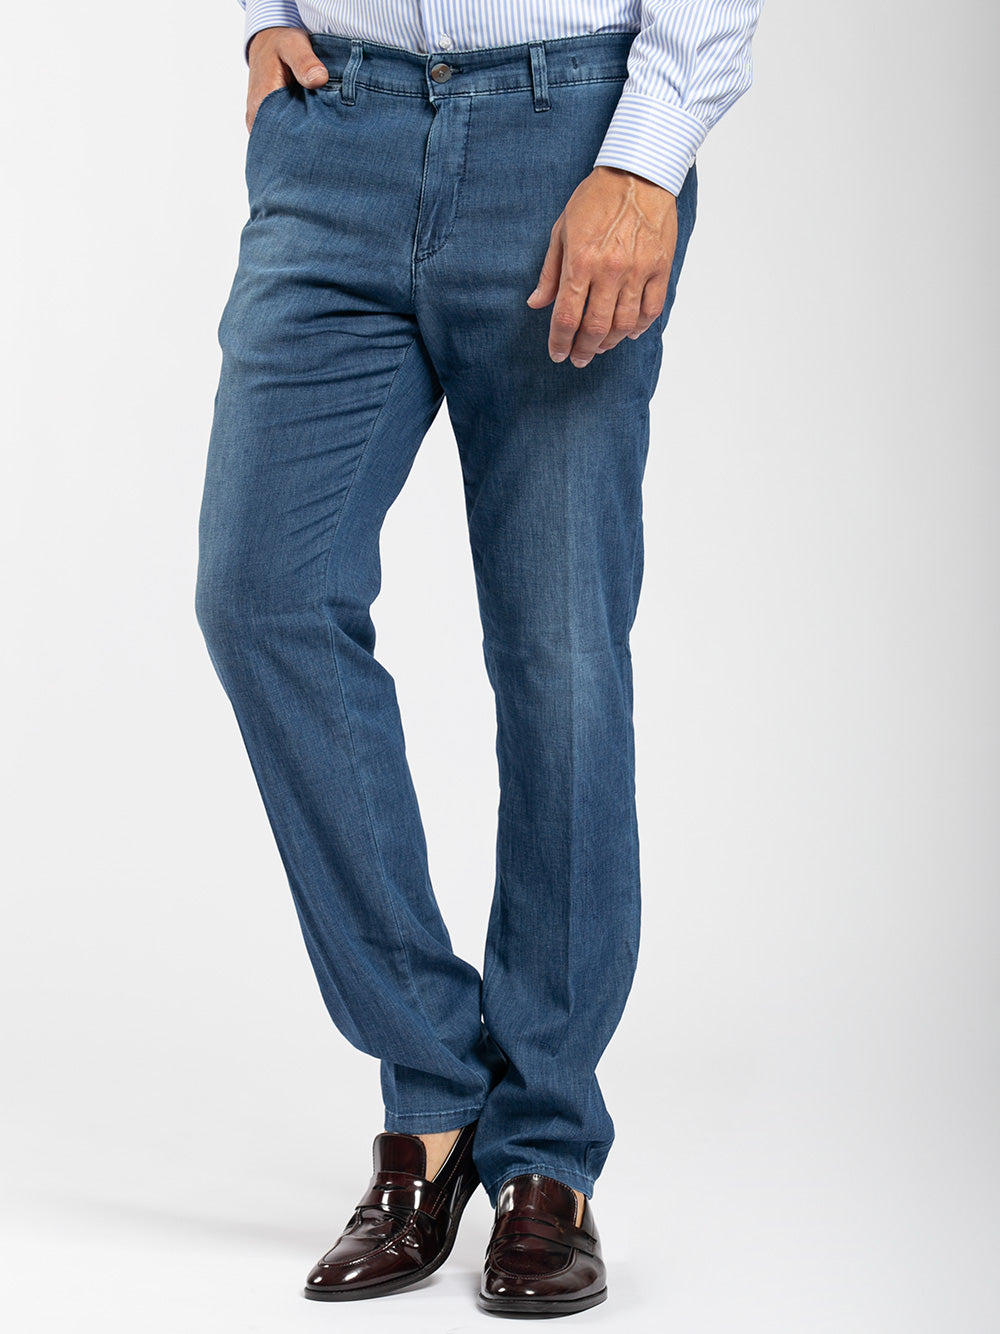 Chino chambray jeans